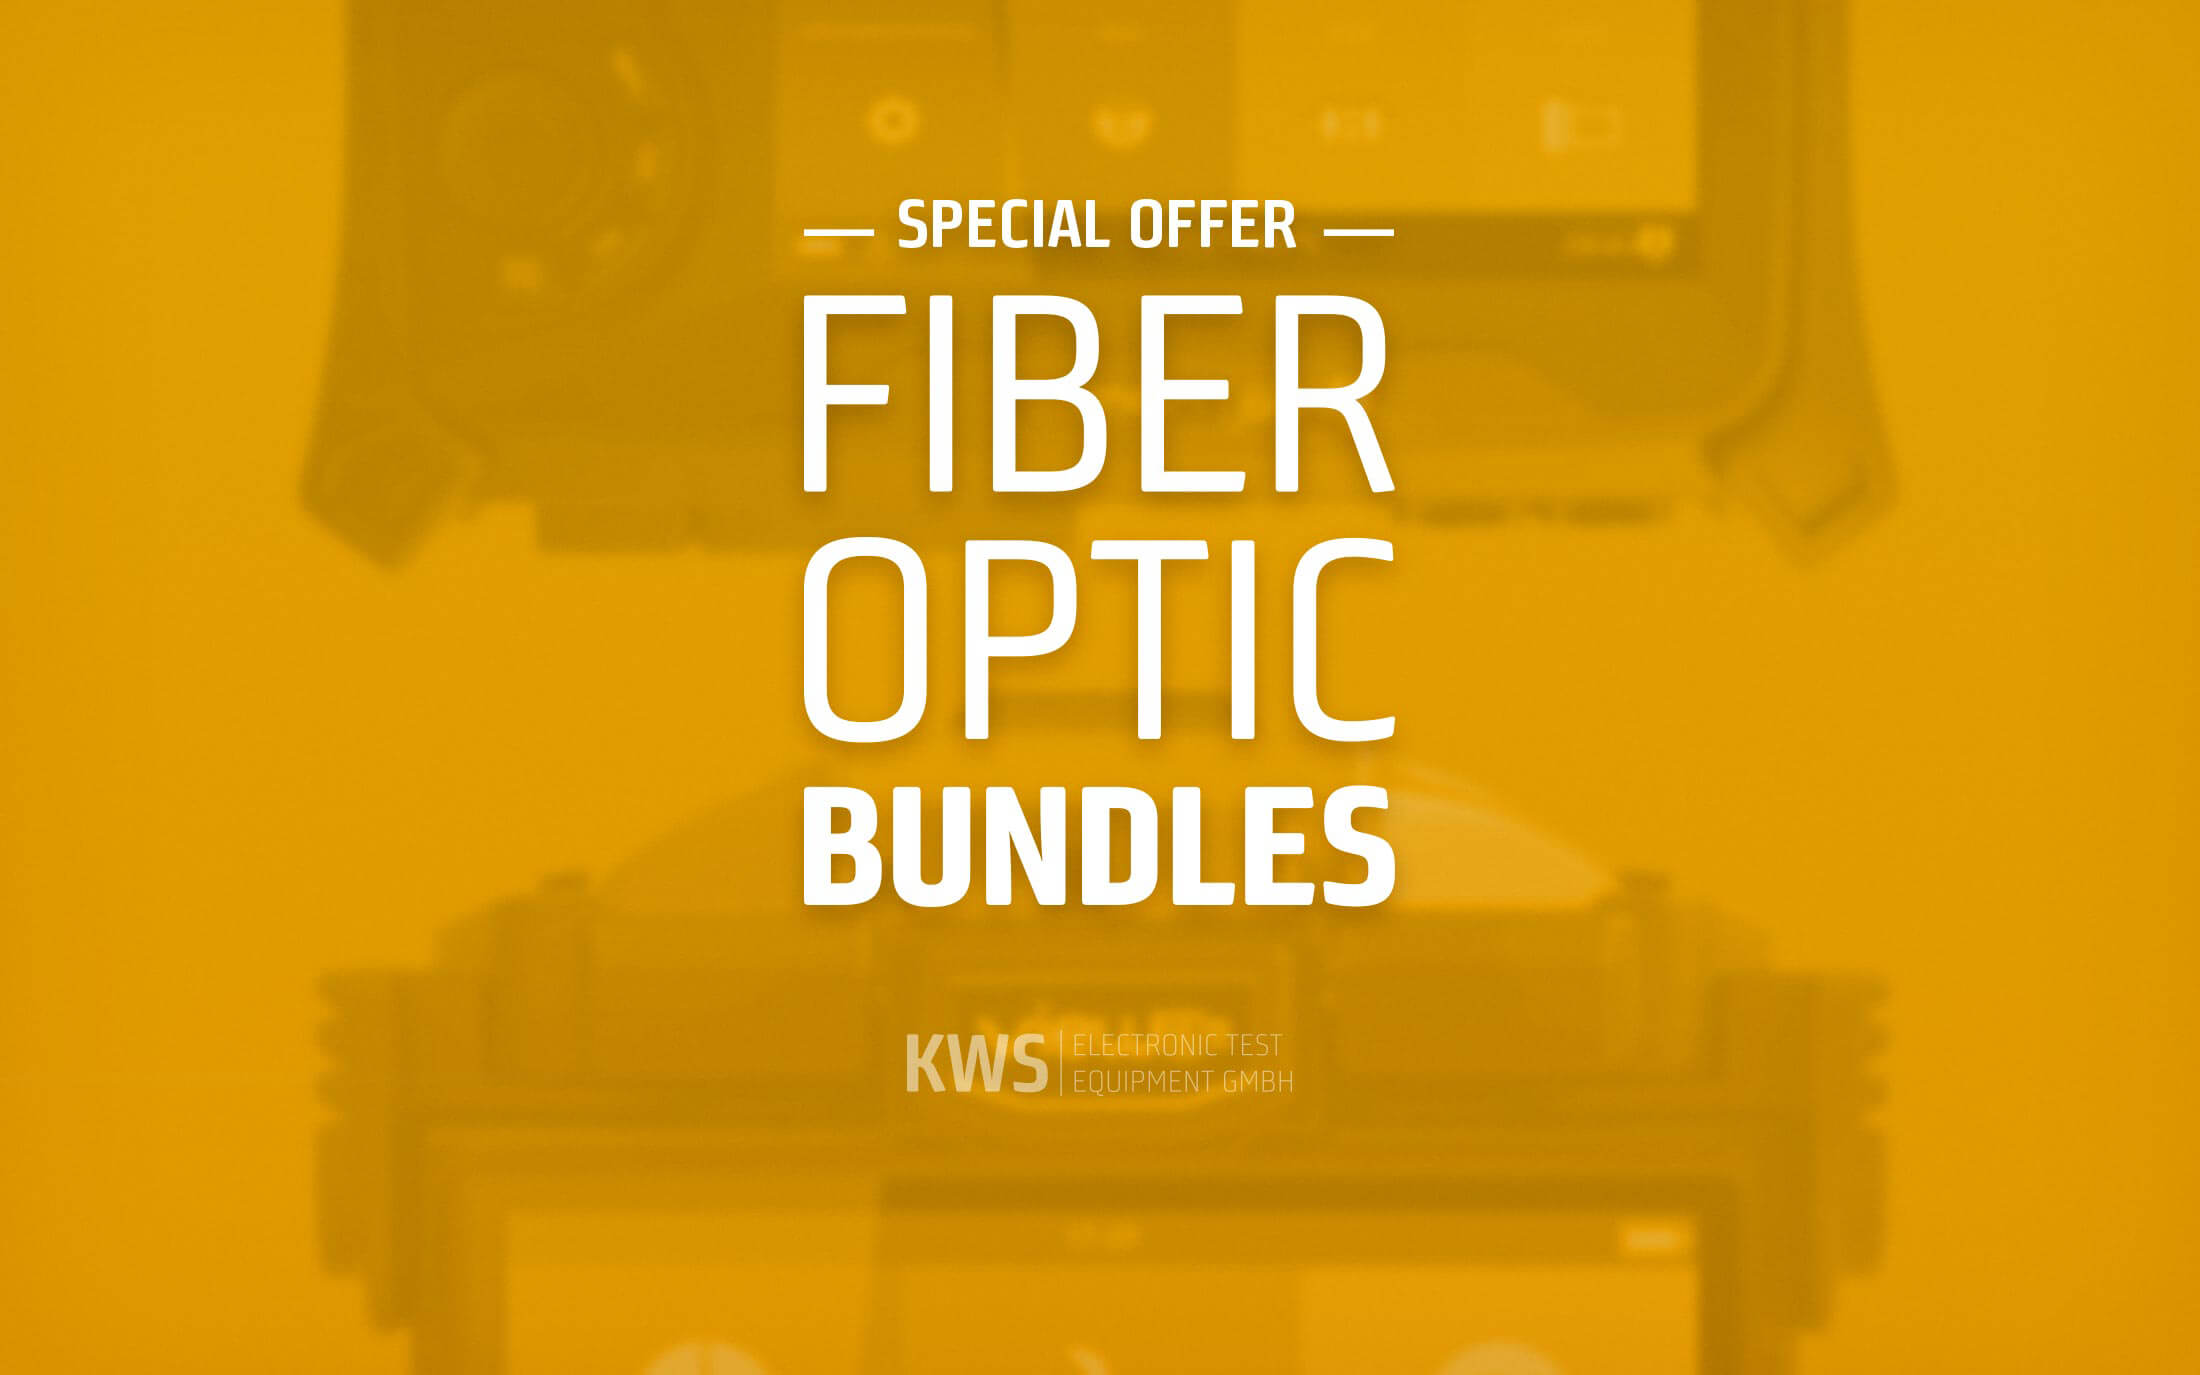 KWS Electronic News 2020: Special offer fiber optics bundles